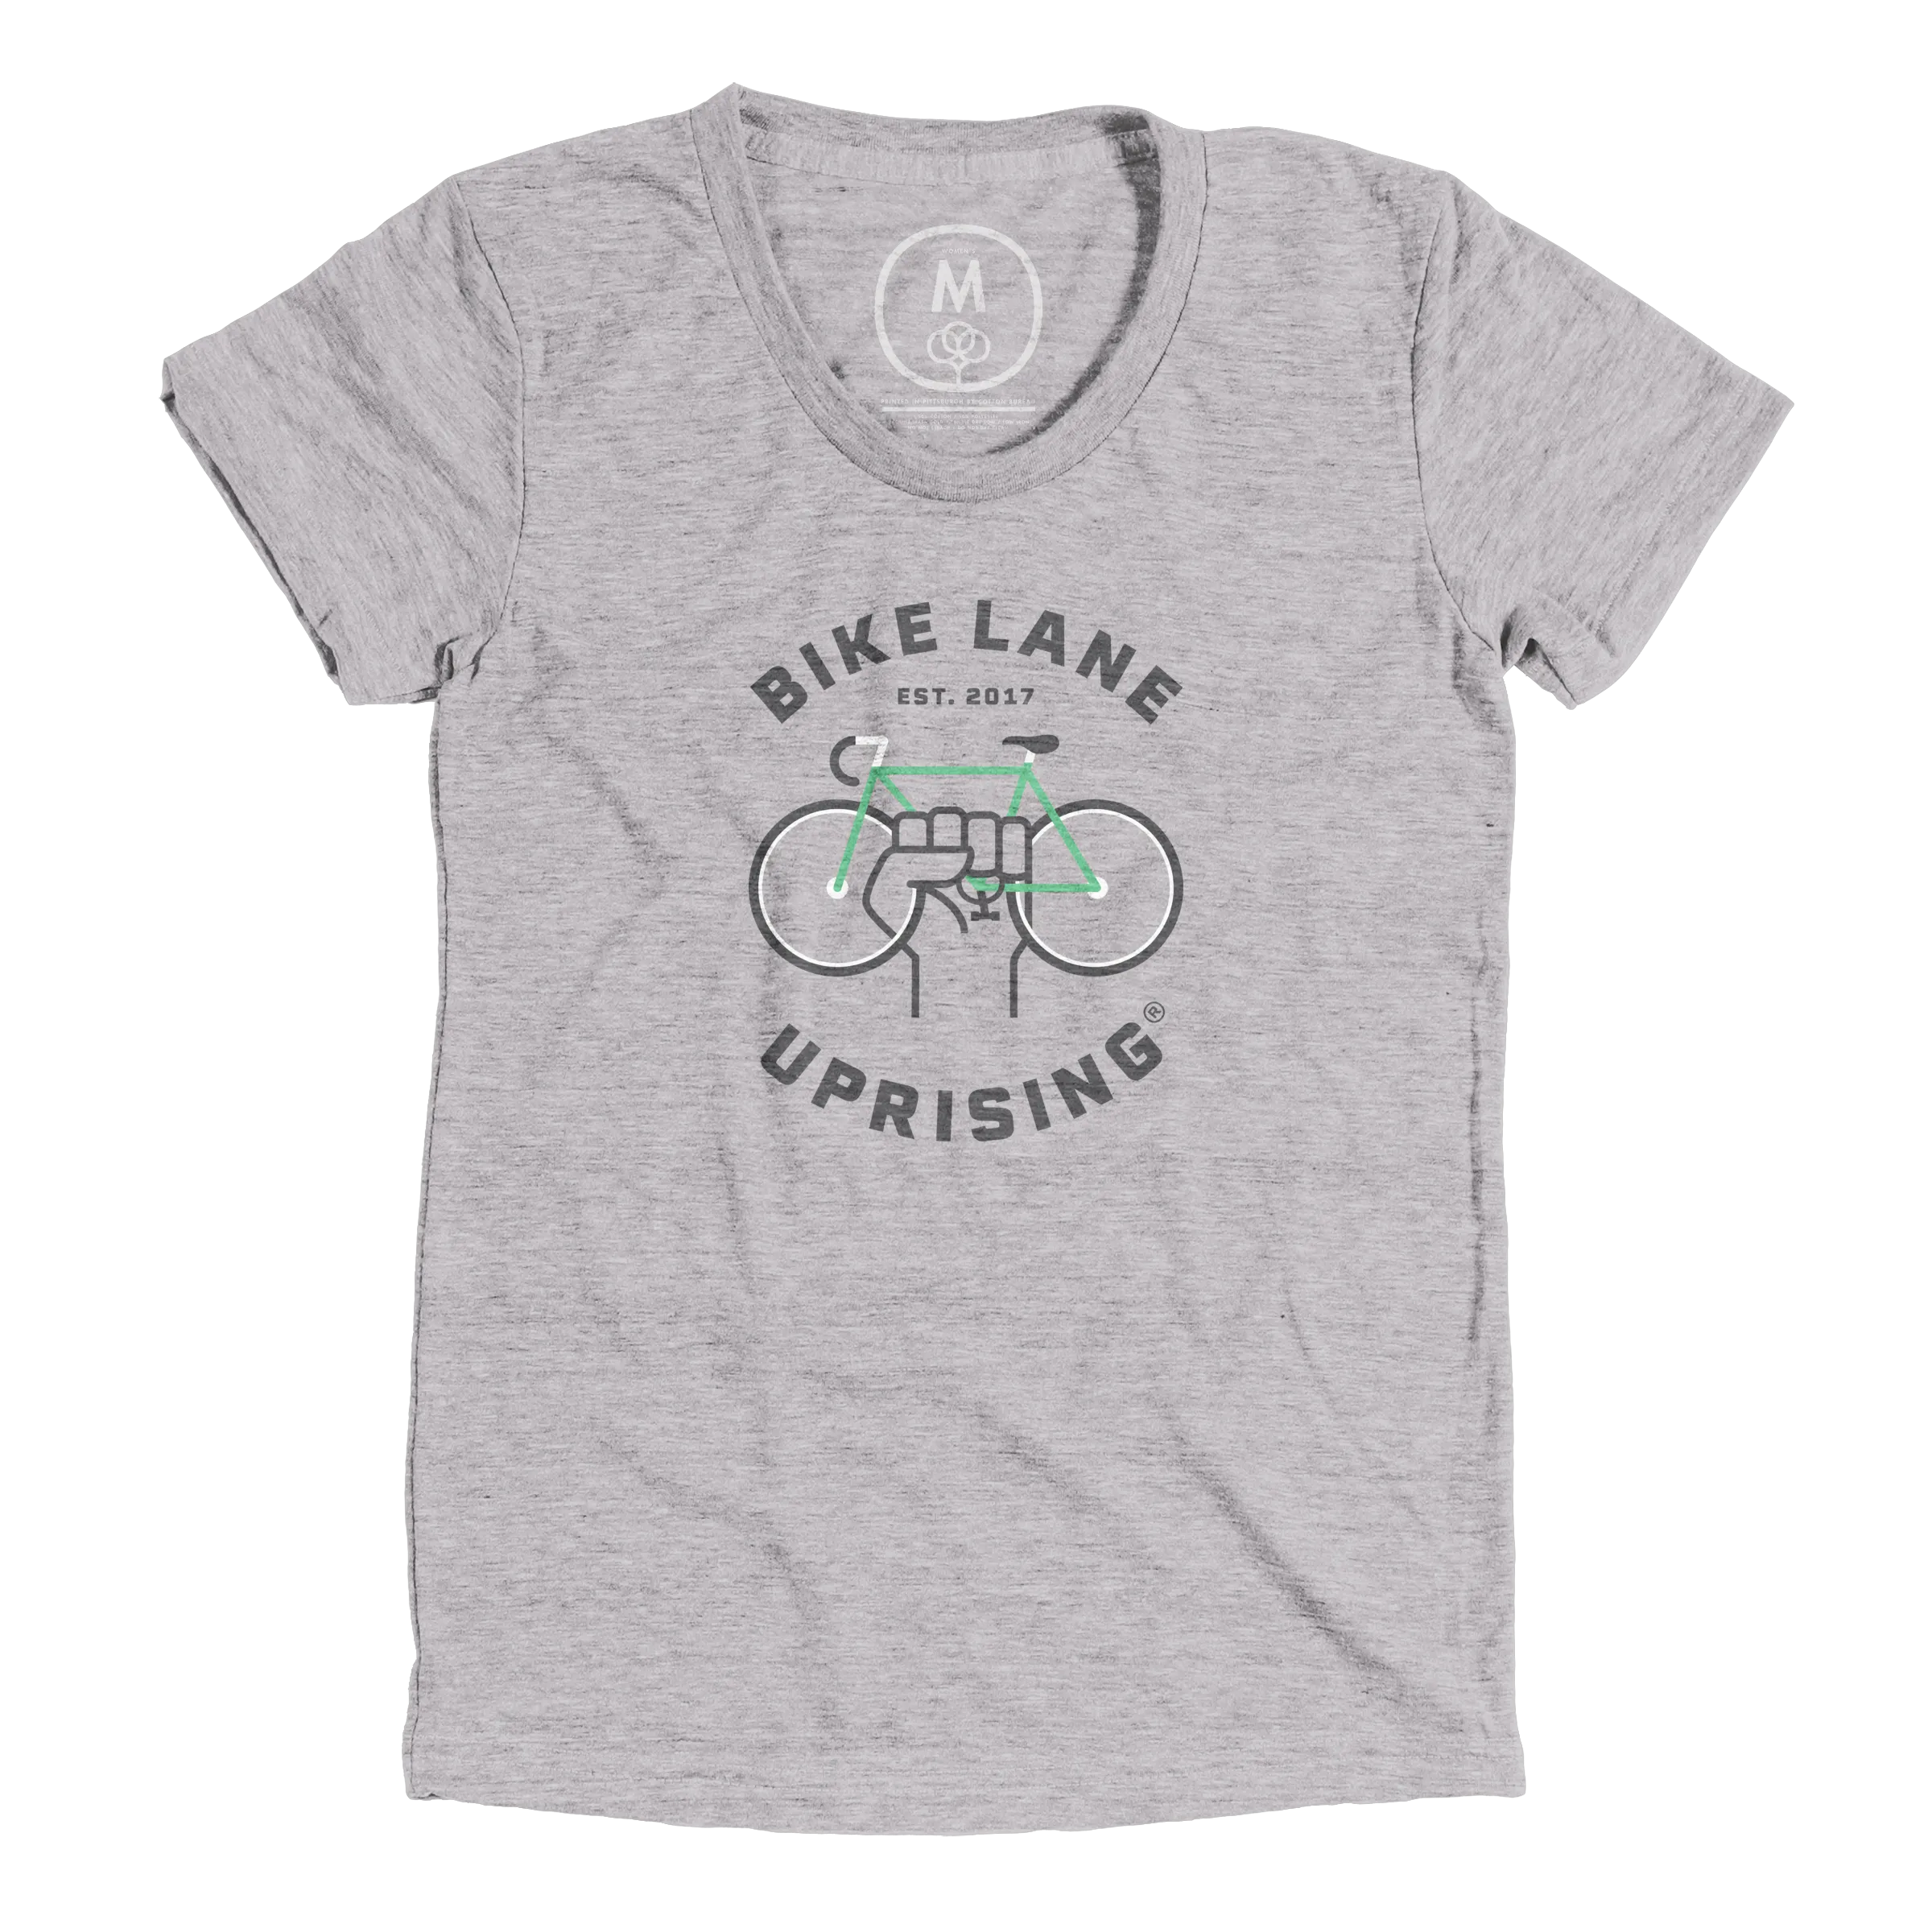 BLU on grey w green - women's” graphic tee and long sleeve tee by Bike Lane  Uprising®.